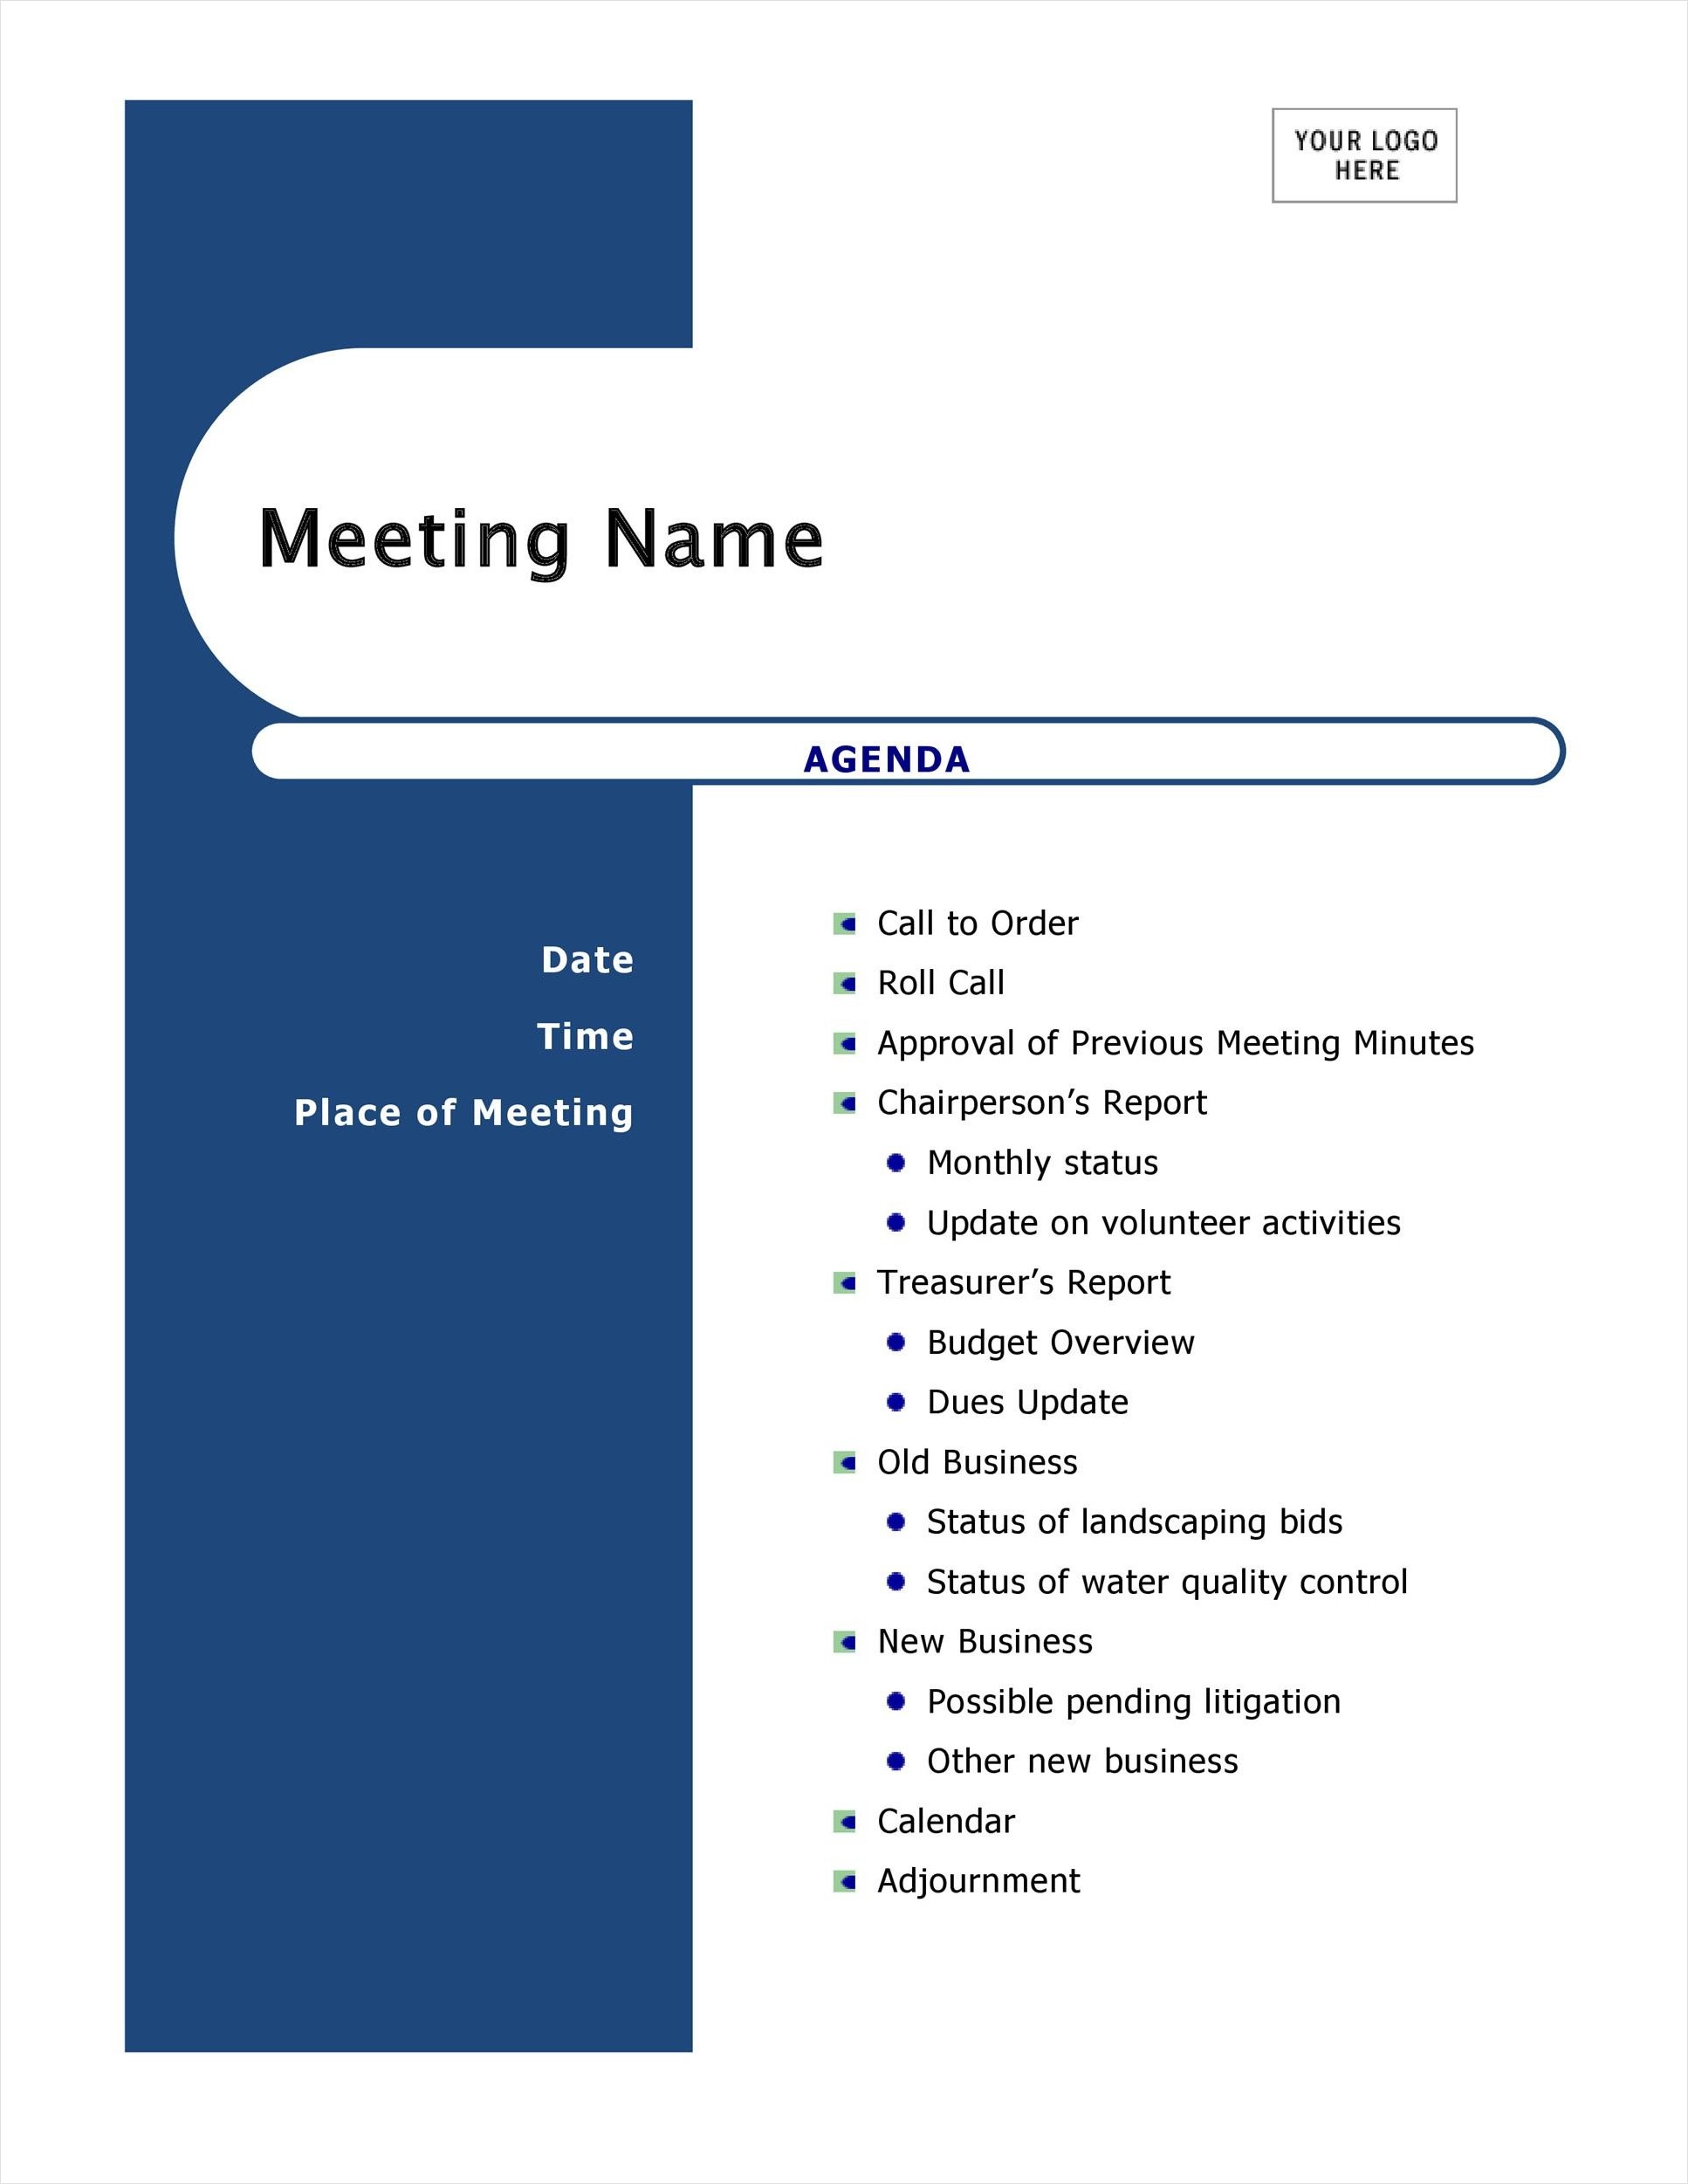 business meeting agenda template